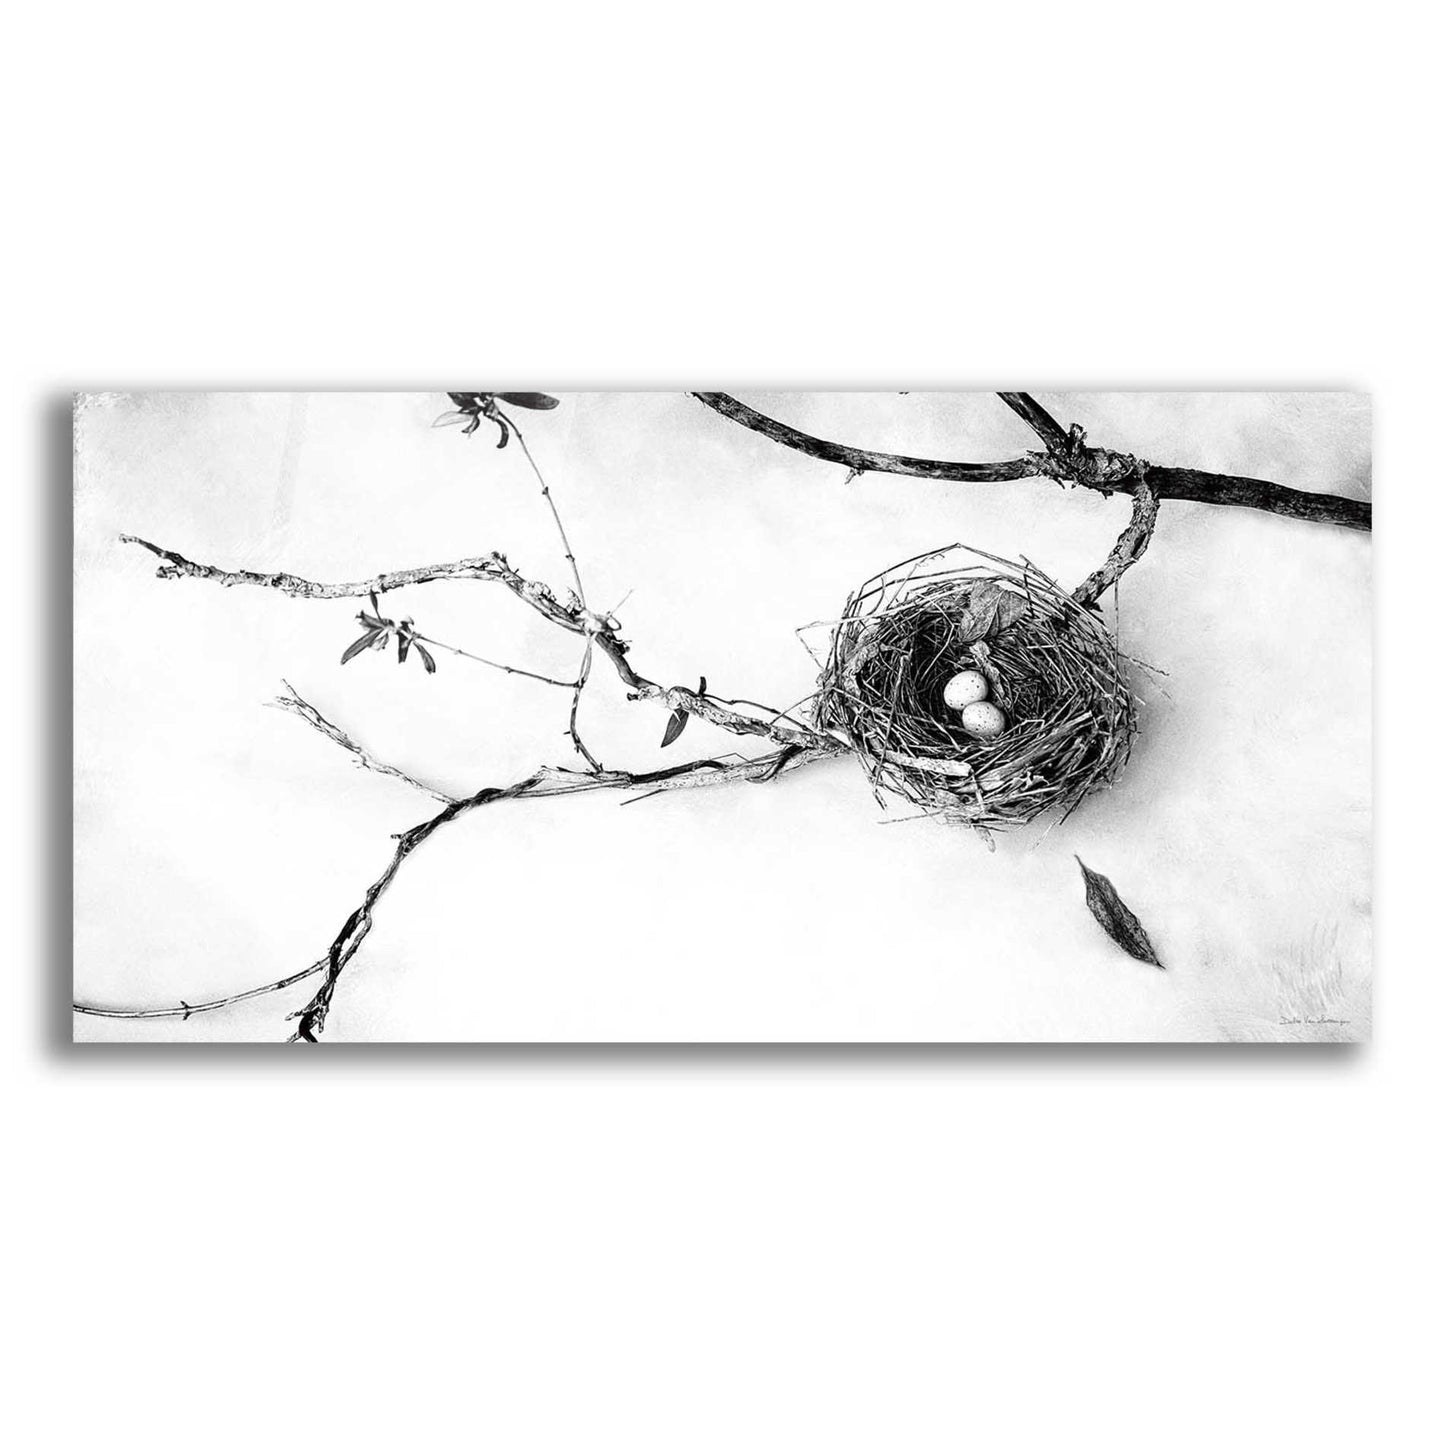 Epic Art 'Nest and Branch II' by Debra Van Swearingen, Acrylic Glass Wall Art,24x12x1.1x0,40x20x1.74x0,60x30x1.74x0